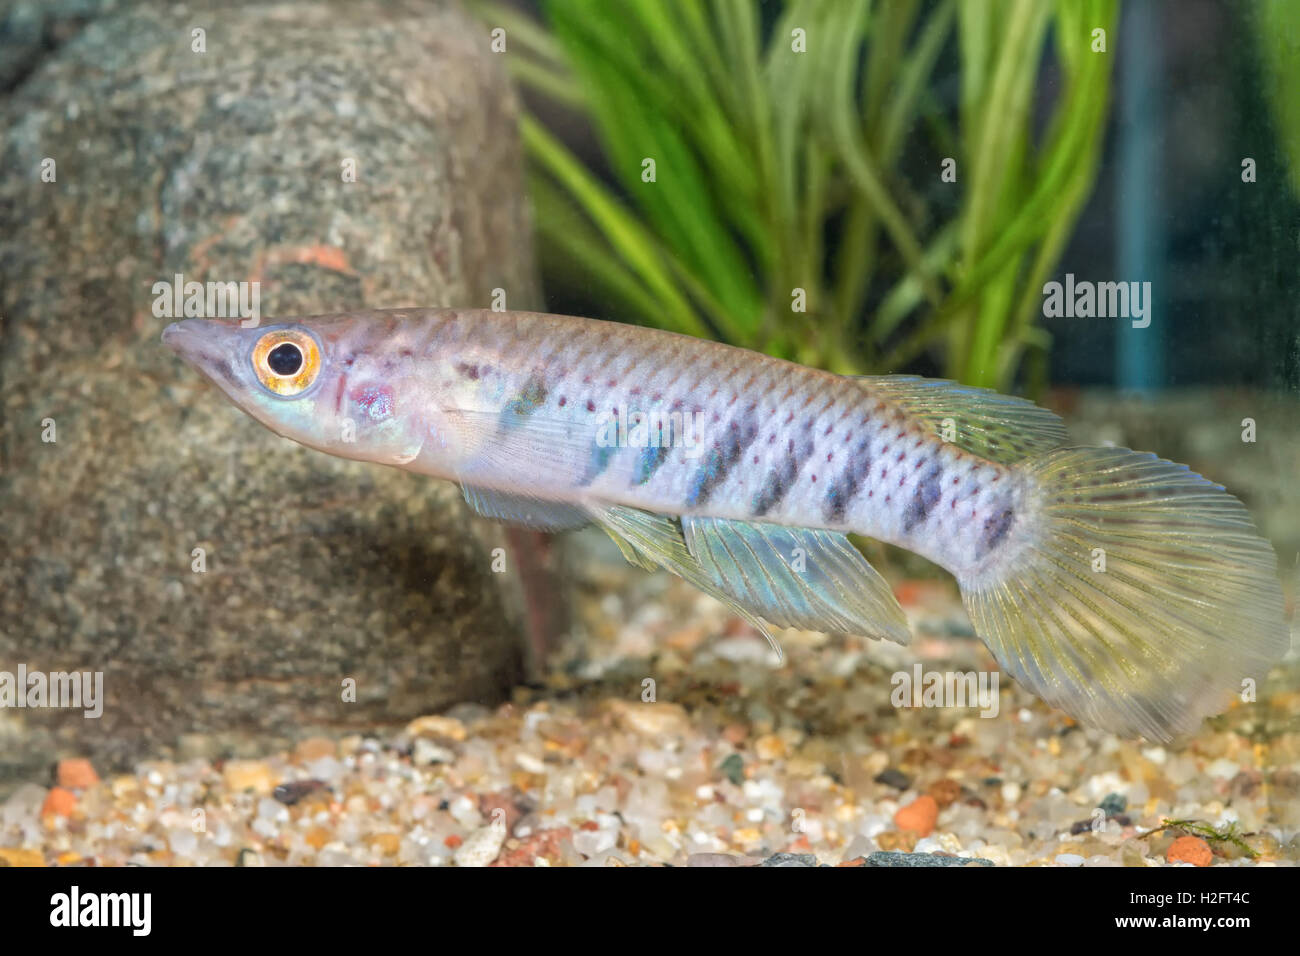 Portrait of freshwater fish (Epiplatys spilargyreius) in aquarium Stock Photo